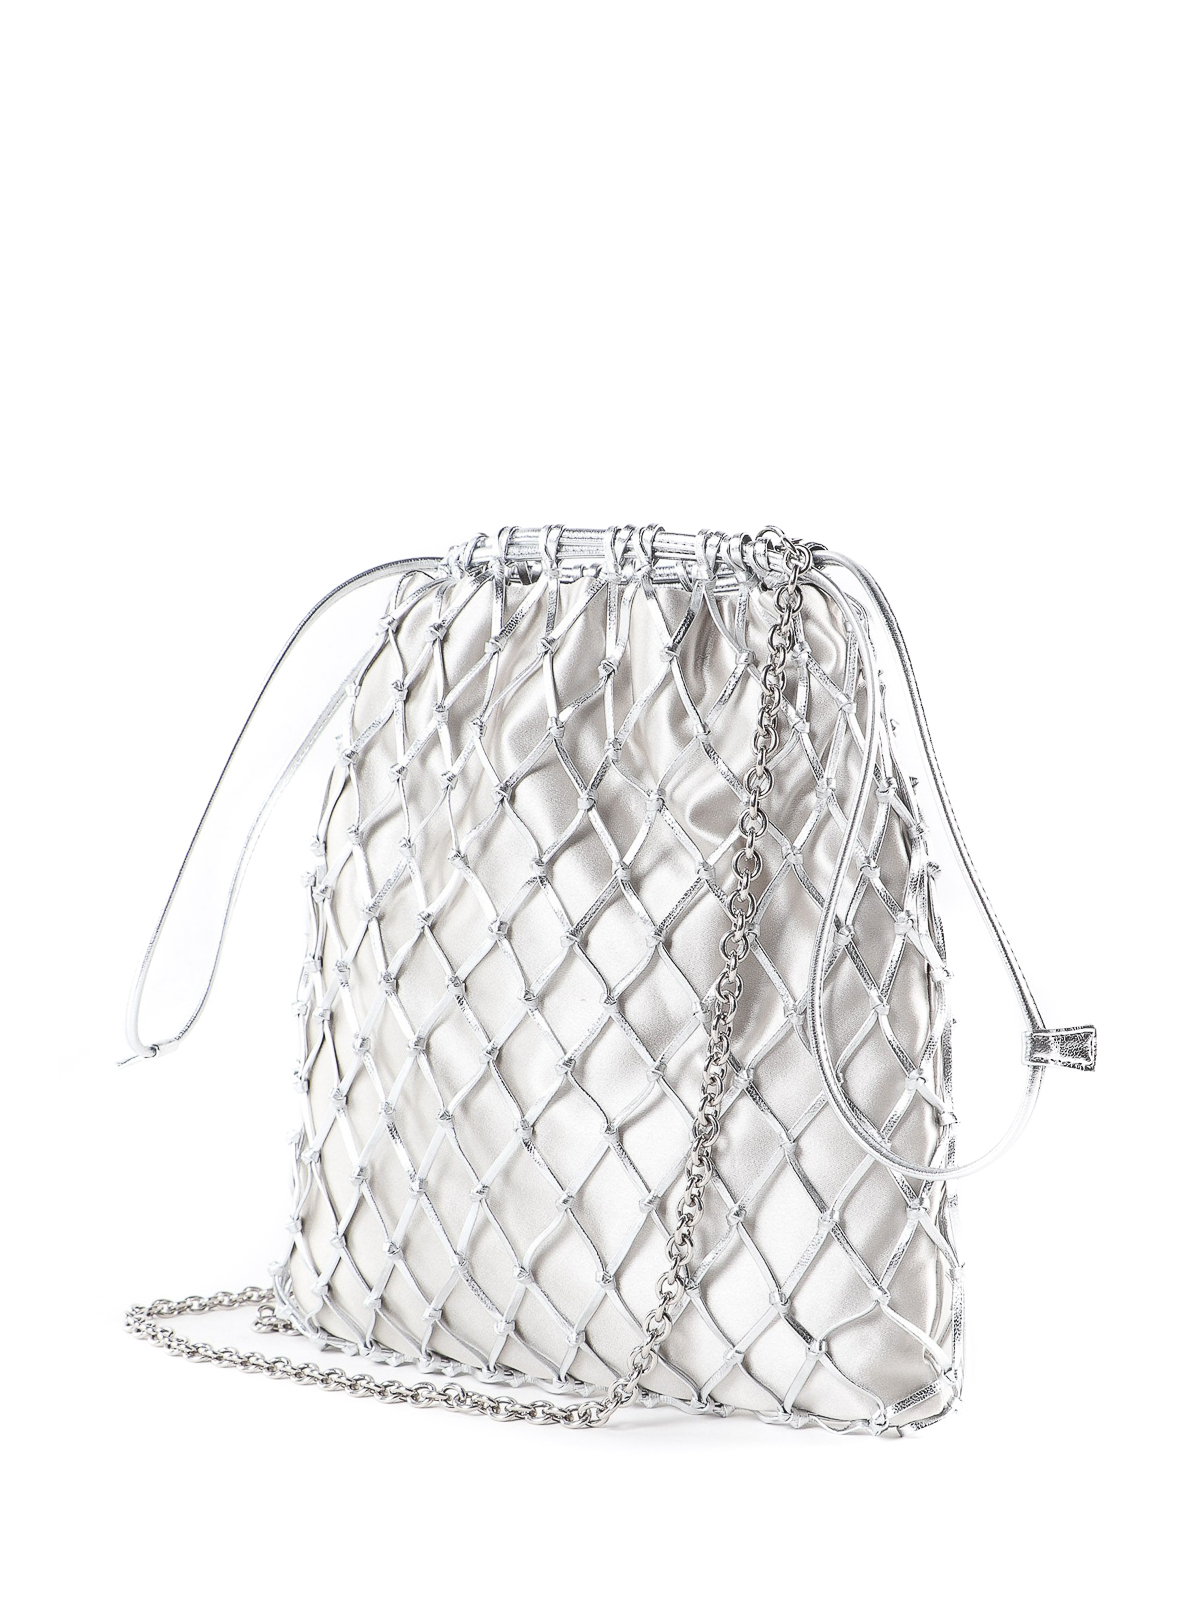 Bucket bags Prada - Silver leather mesh and satin bag - 1BC075AR2118